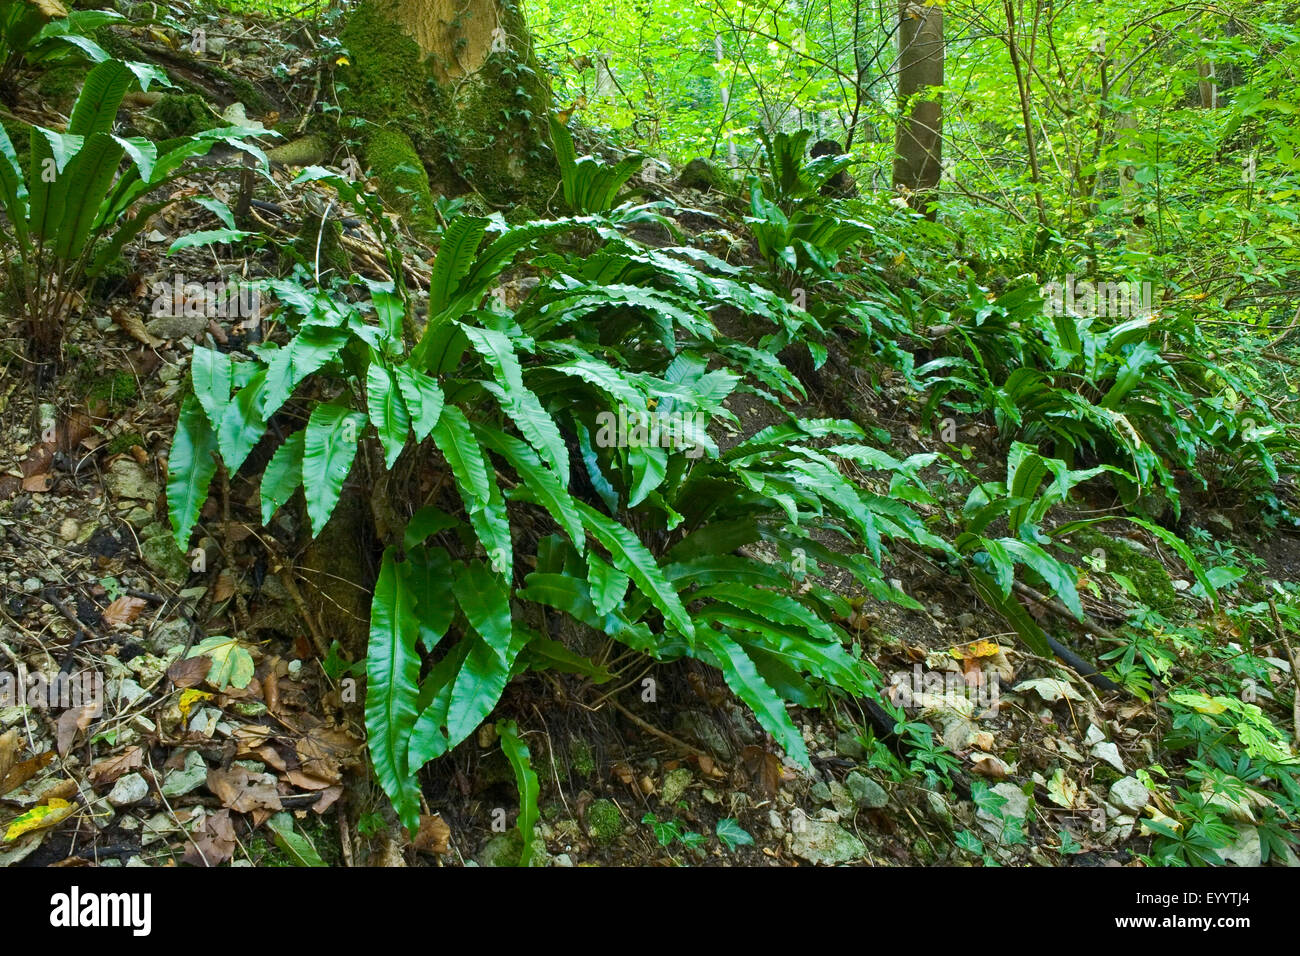 hart's tongue, European harts-tongue fern (Asplenium scolopendrium, Phyllitis scolopendrium), in a forest, Germany Stock Photo